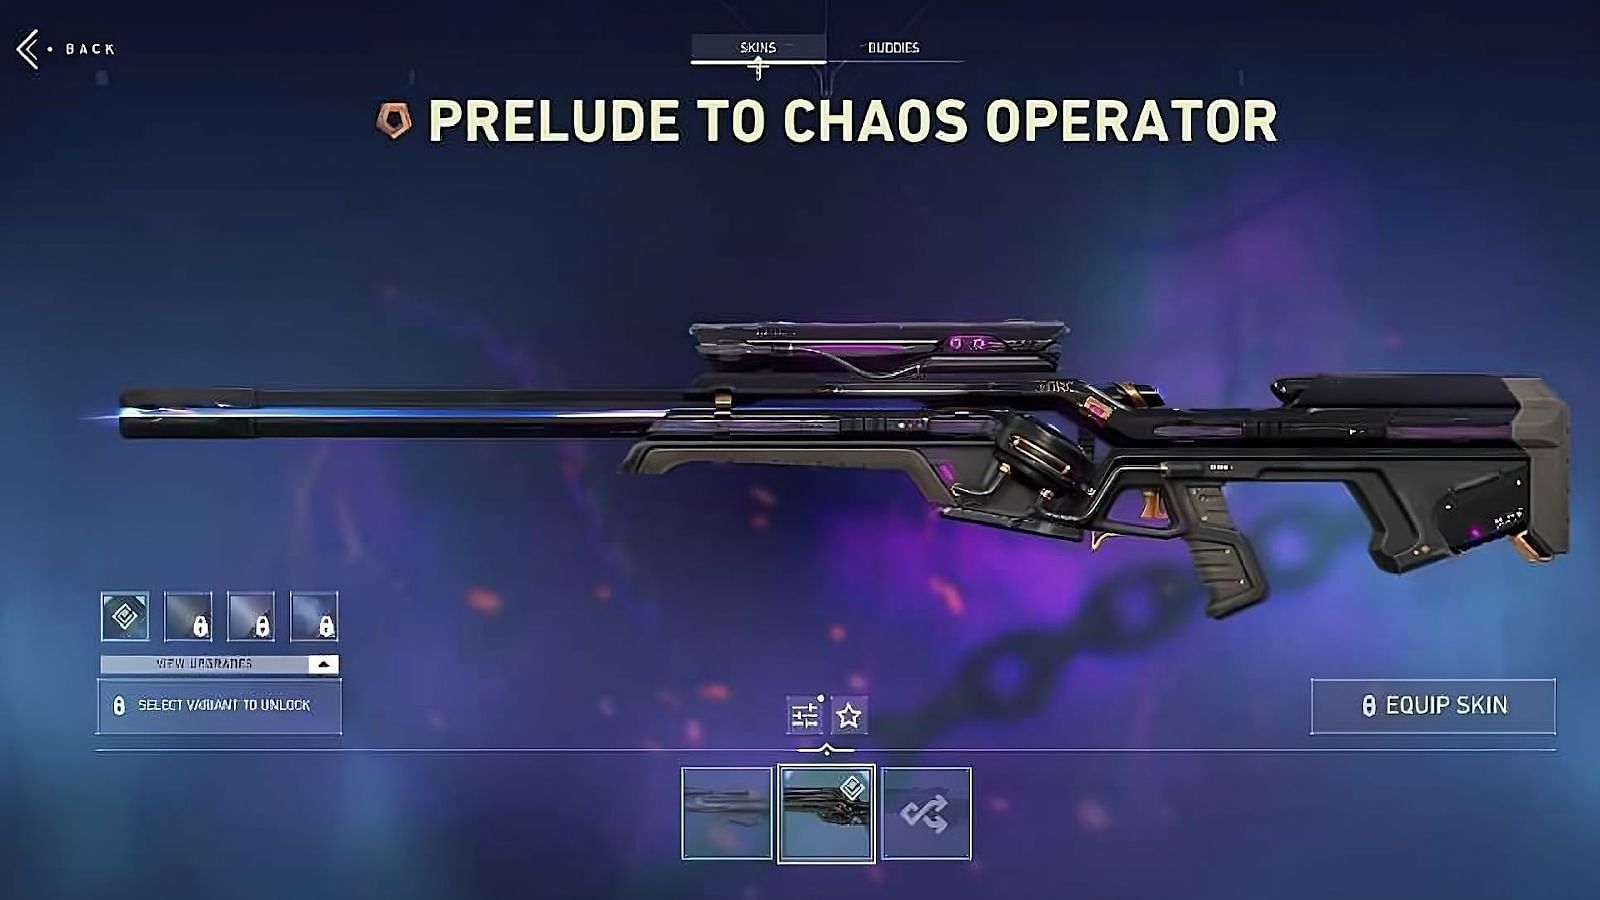 Prelude to Chaos Operator (Image via Riot Games)